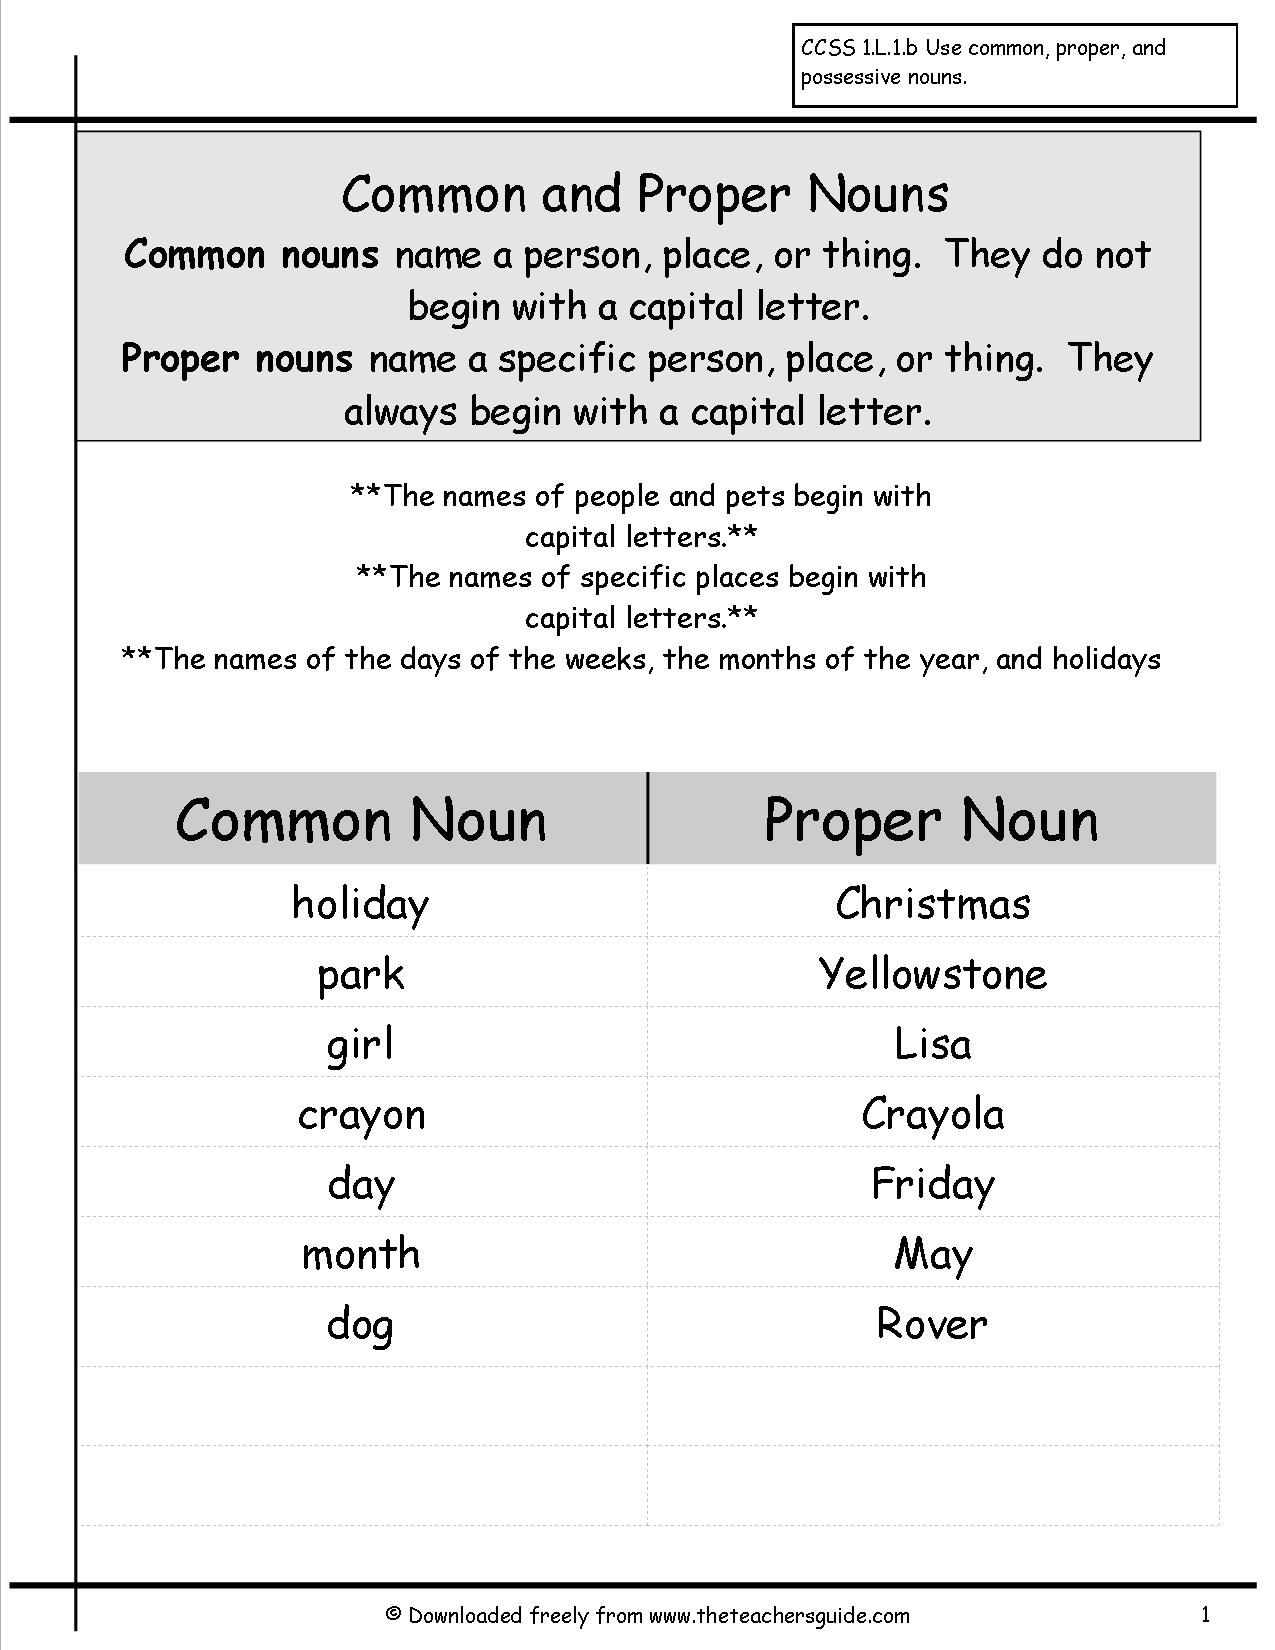 common-noun-and-proper-noun-worksheet-for-grade-1-commonworksheets